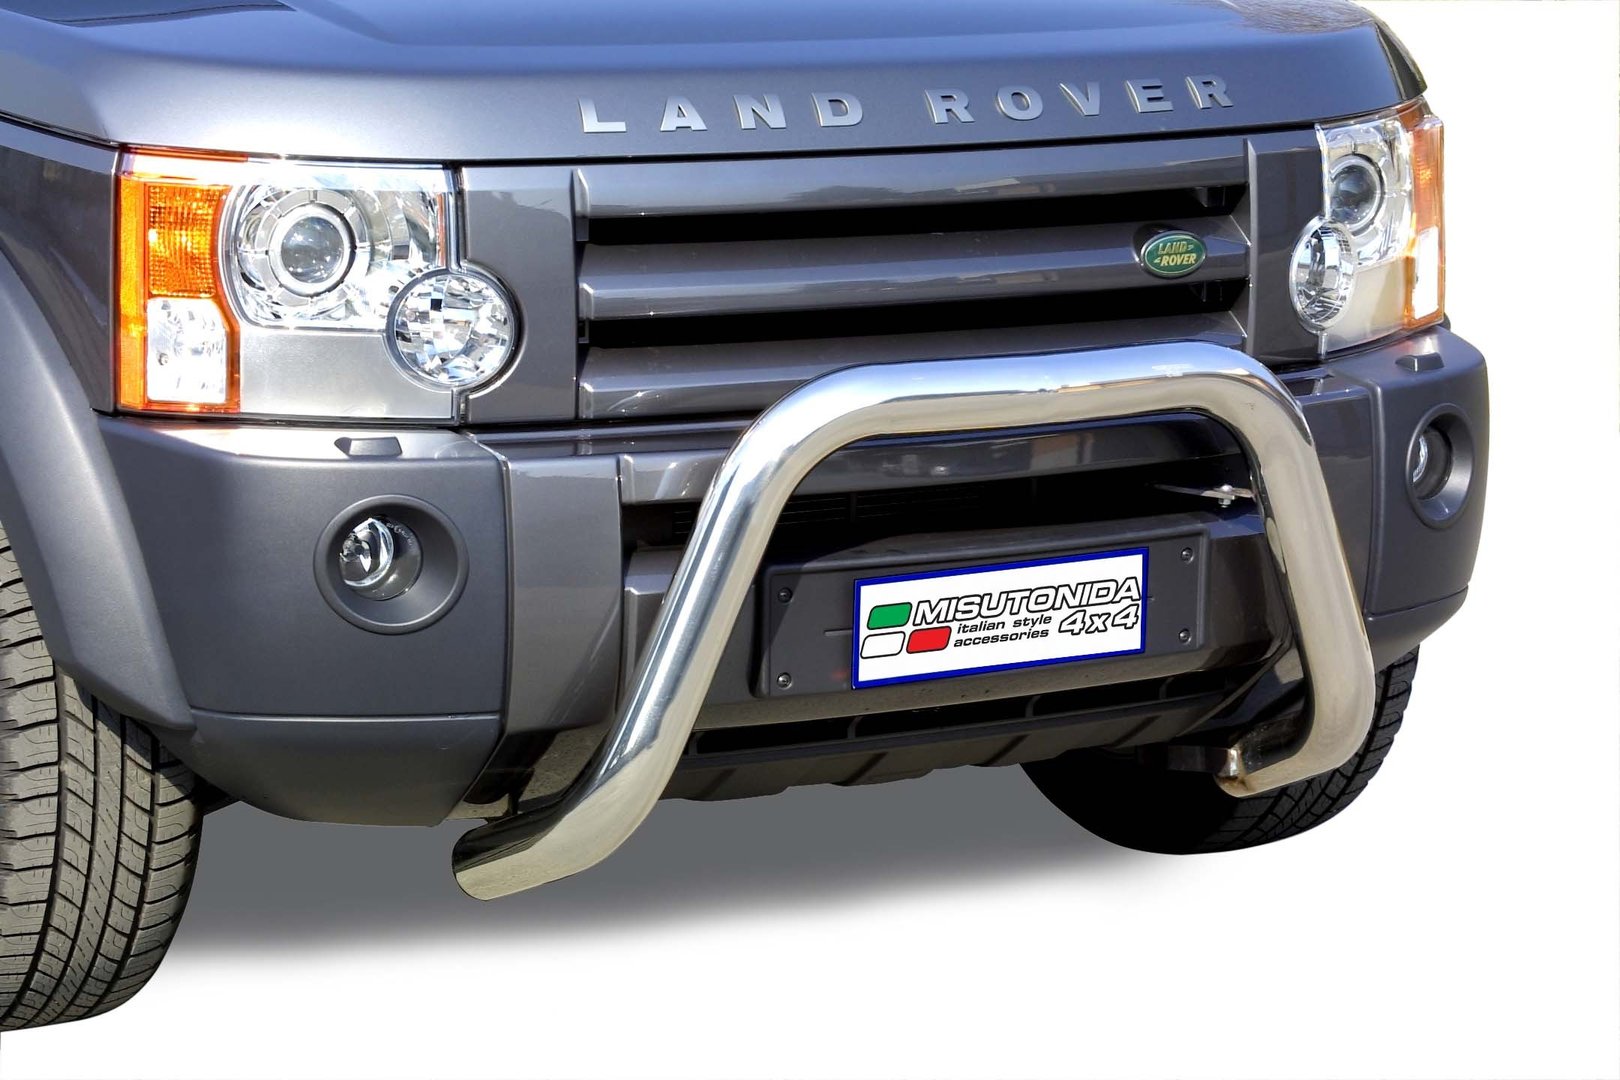 Land Rover Discovery 3 EU-Valorauta 2004-2009 (Misutonida)